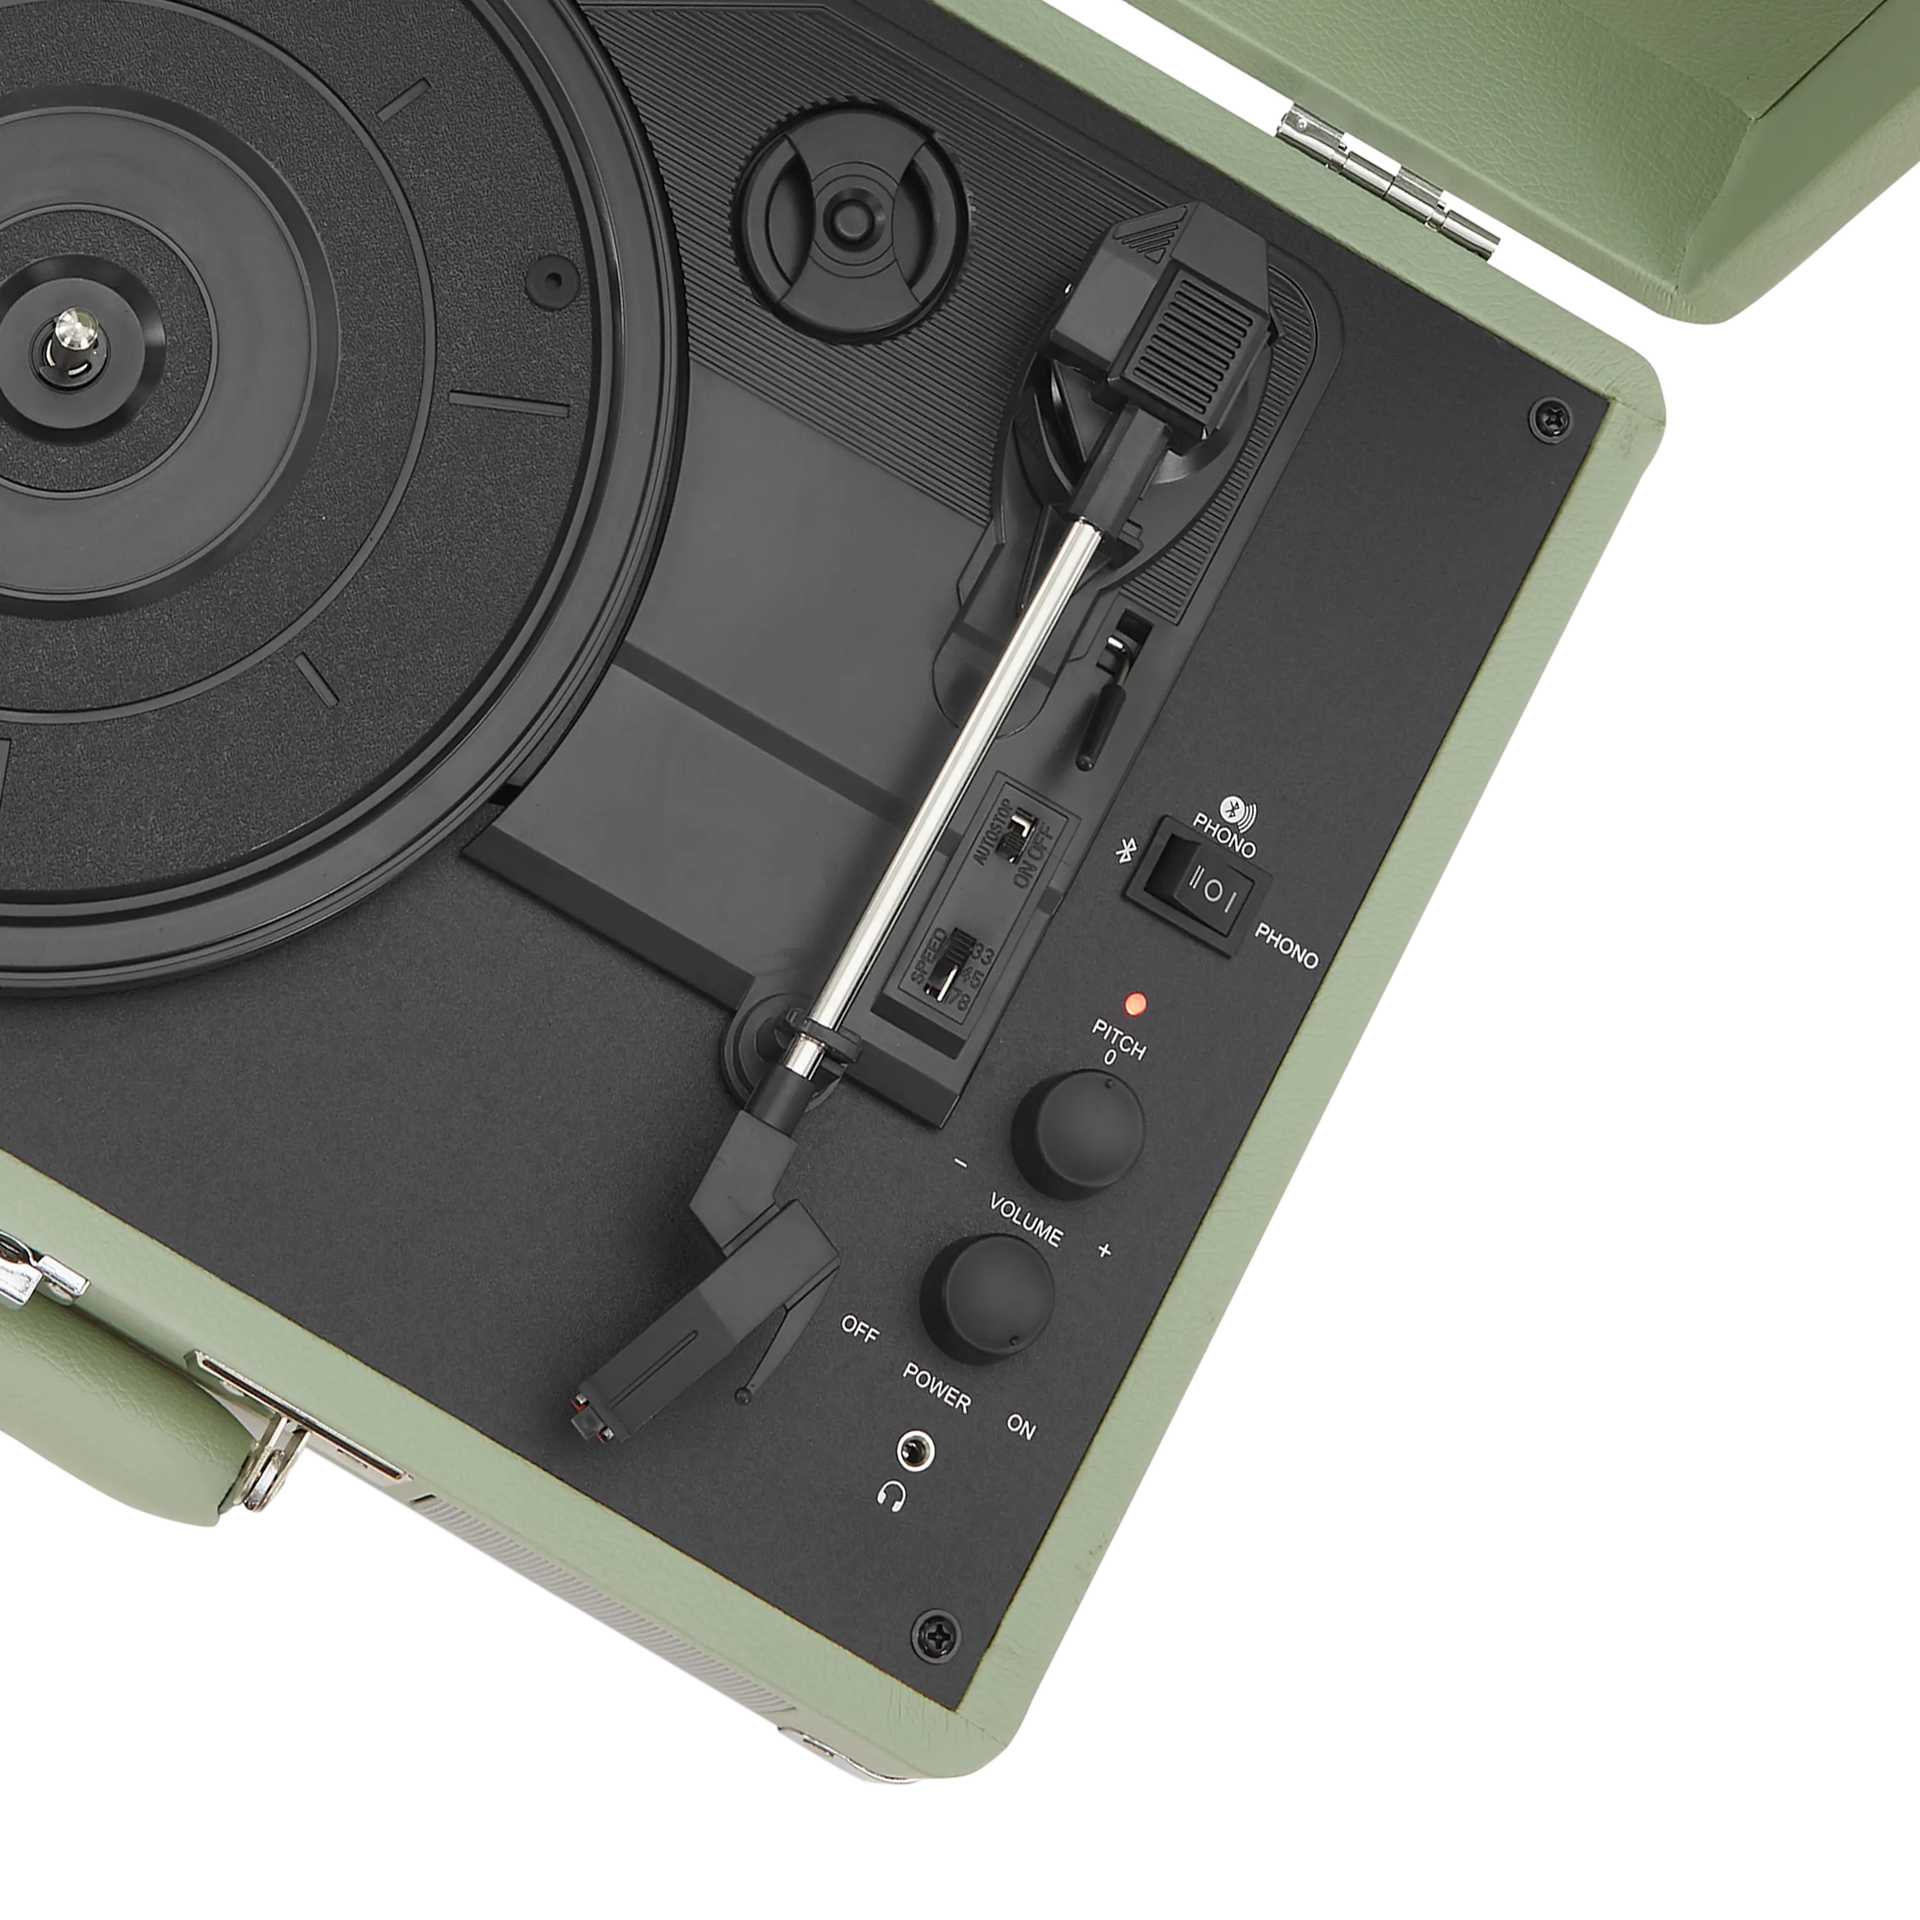 Cruiser Plus 2-way Bluetooth record player - CR8005F-MT | Mint Crosley Radio Europe